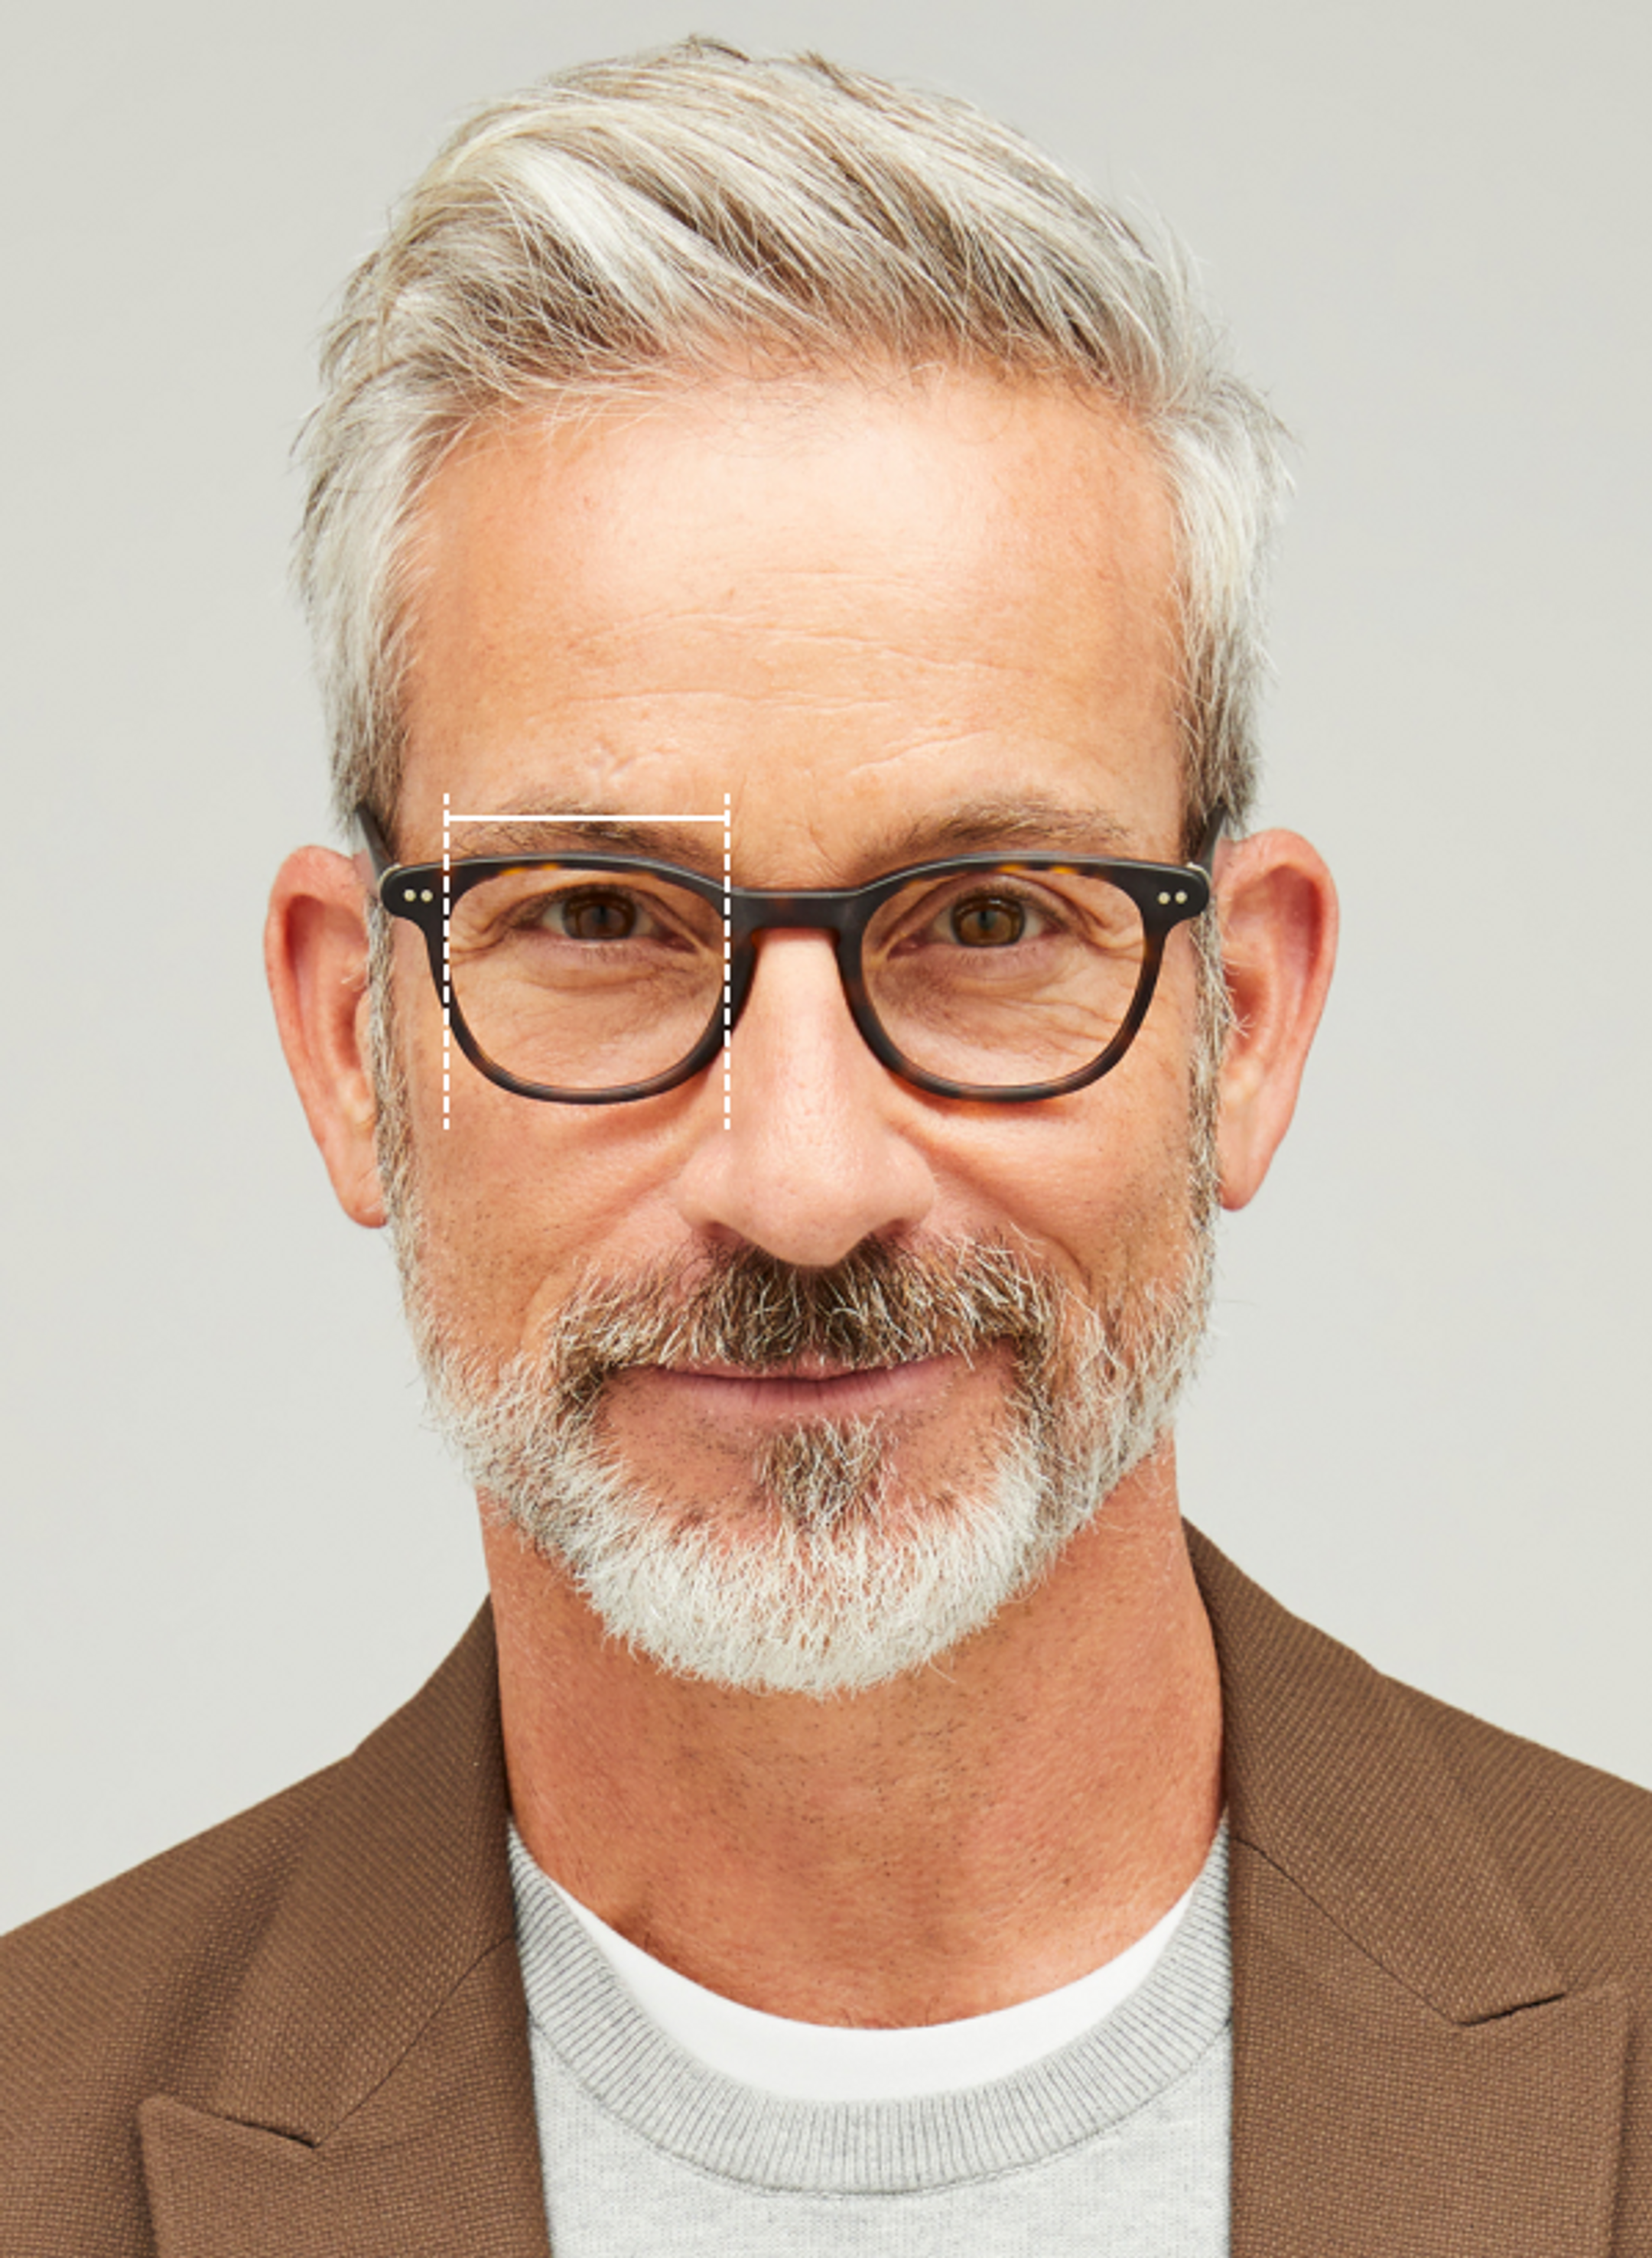 Male model wearing eyeglasses with cross hairs over one eye